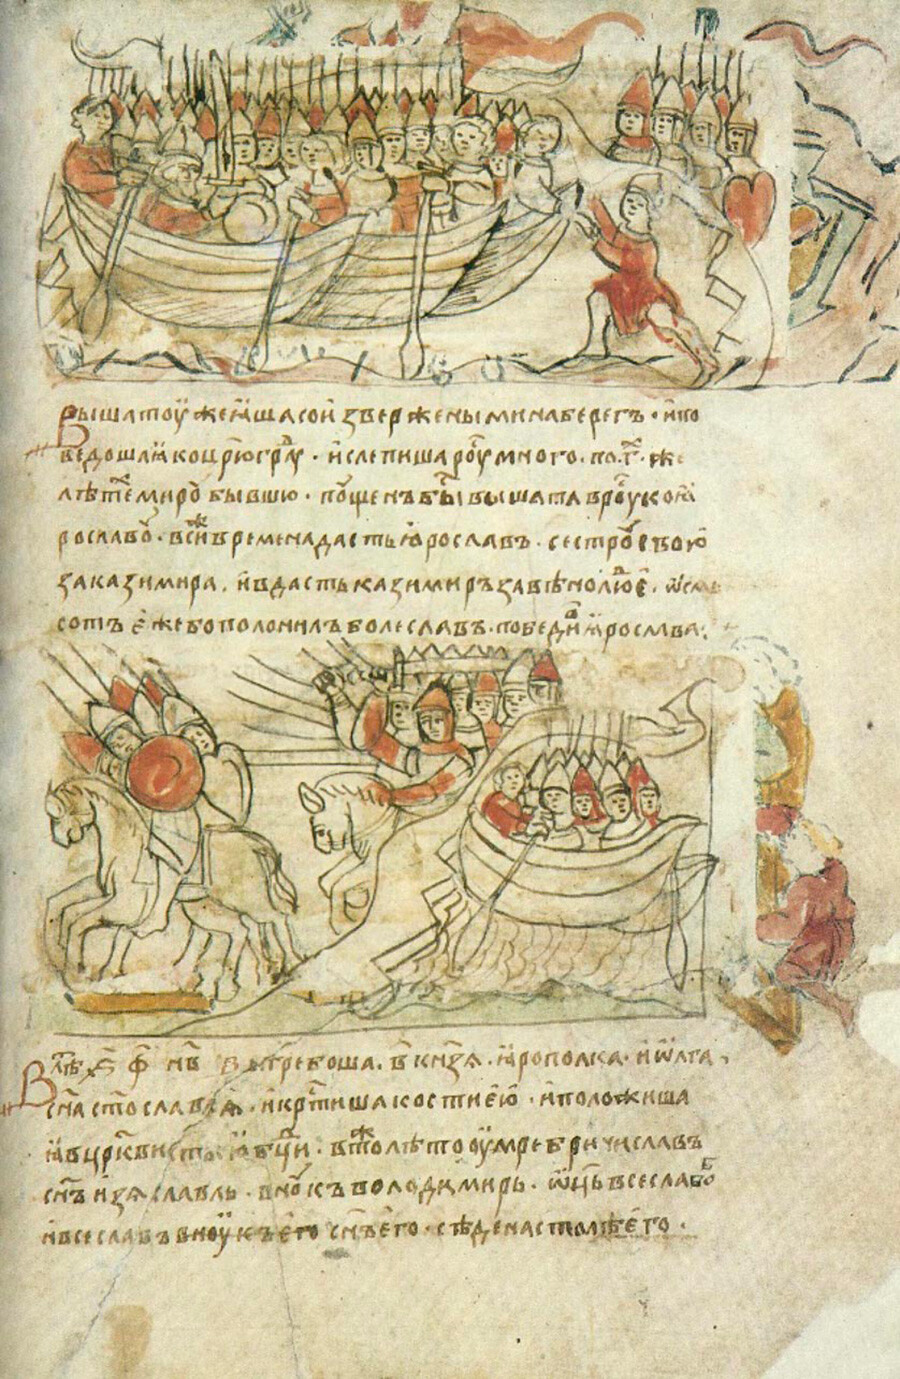 Rusko-bizantinska vojna leta 1043  